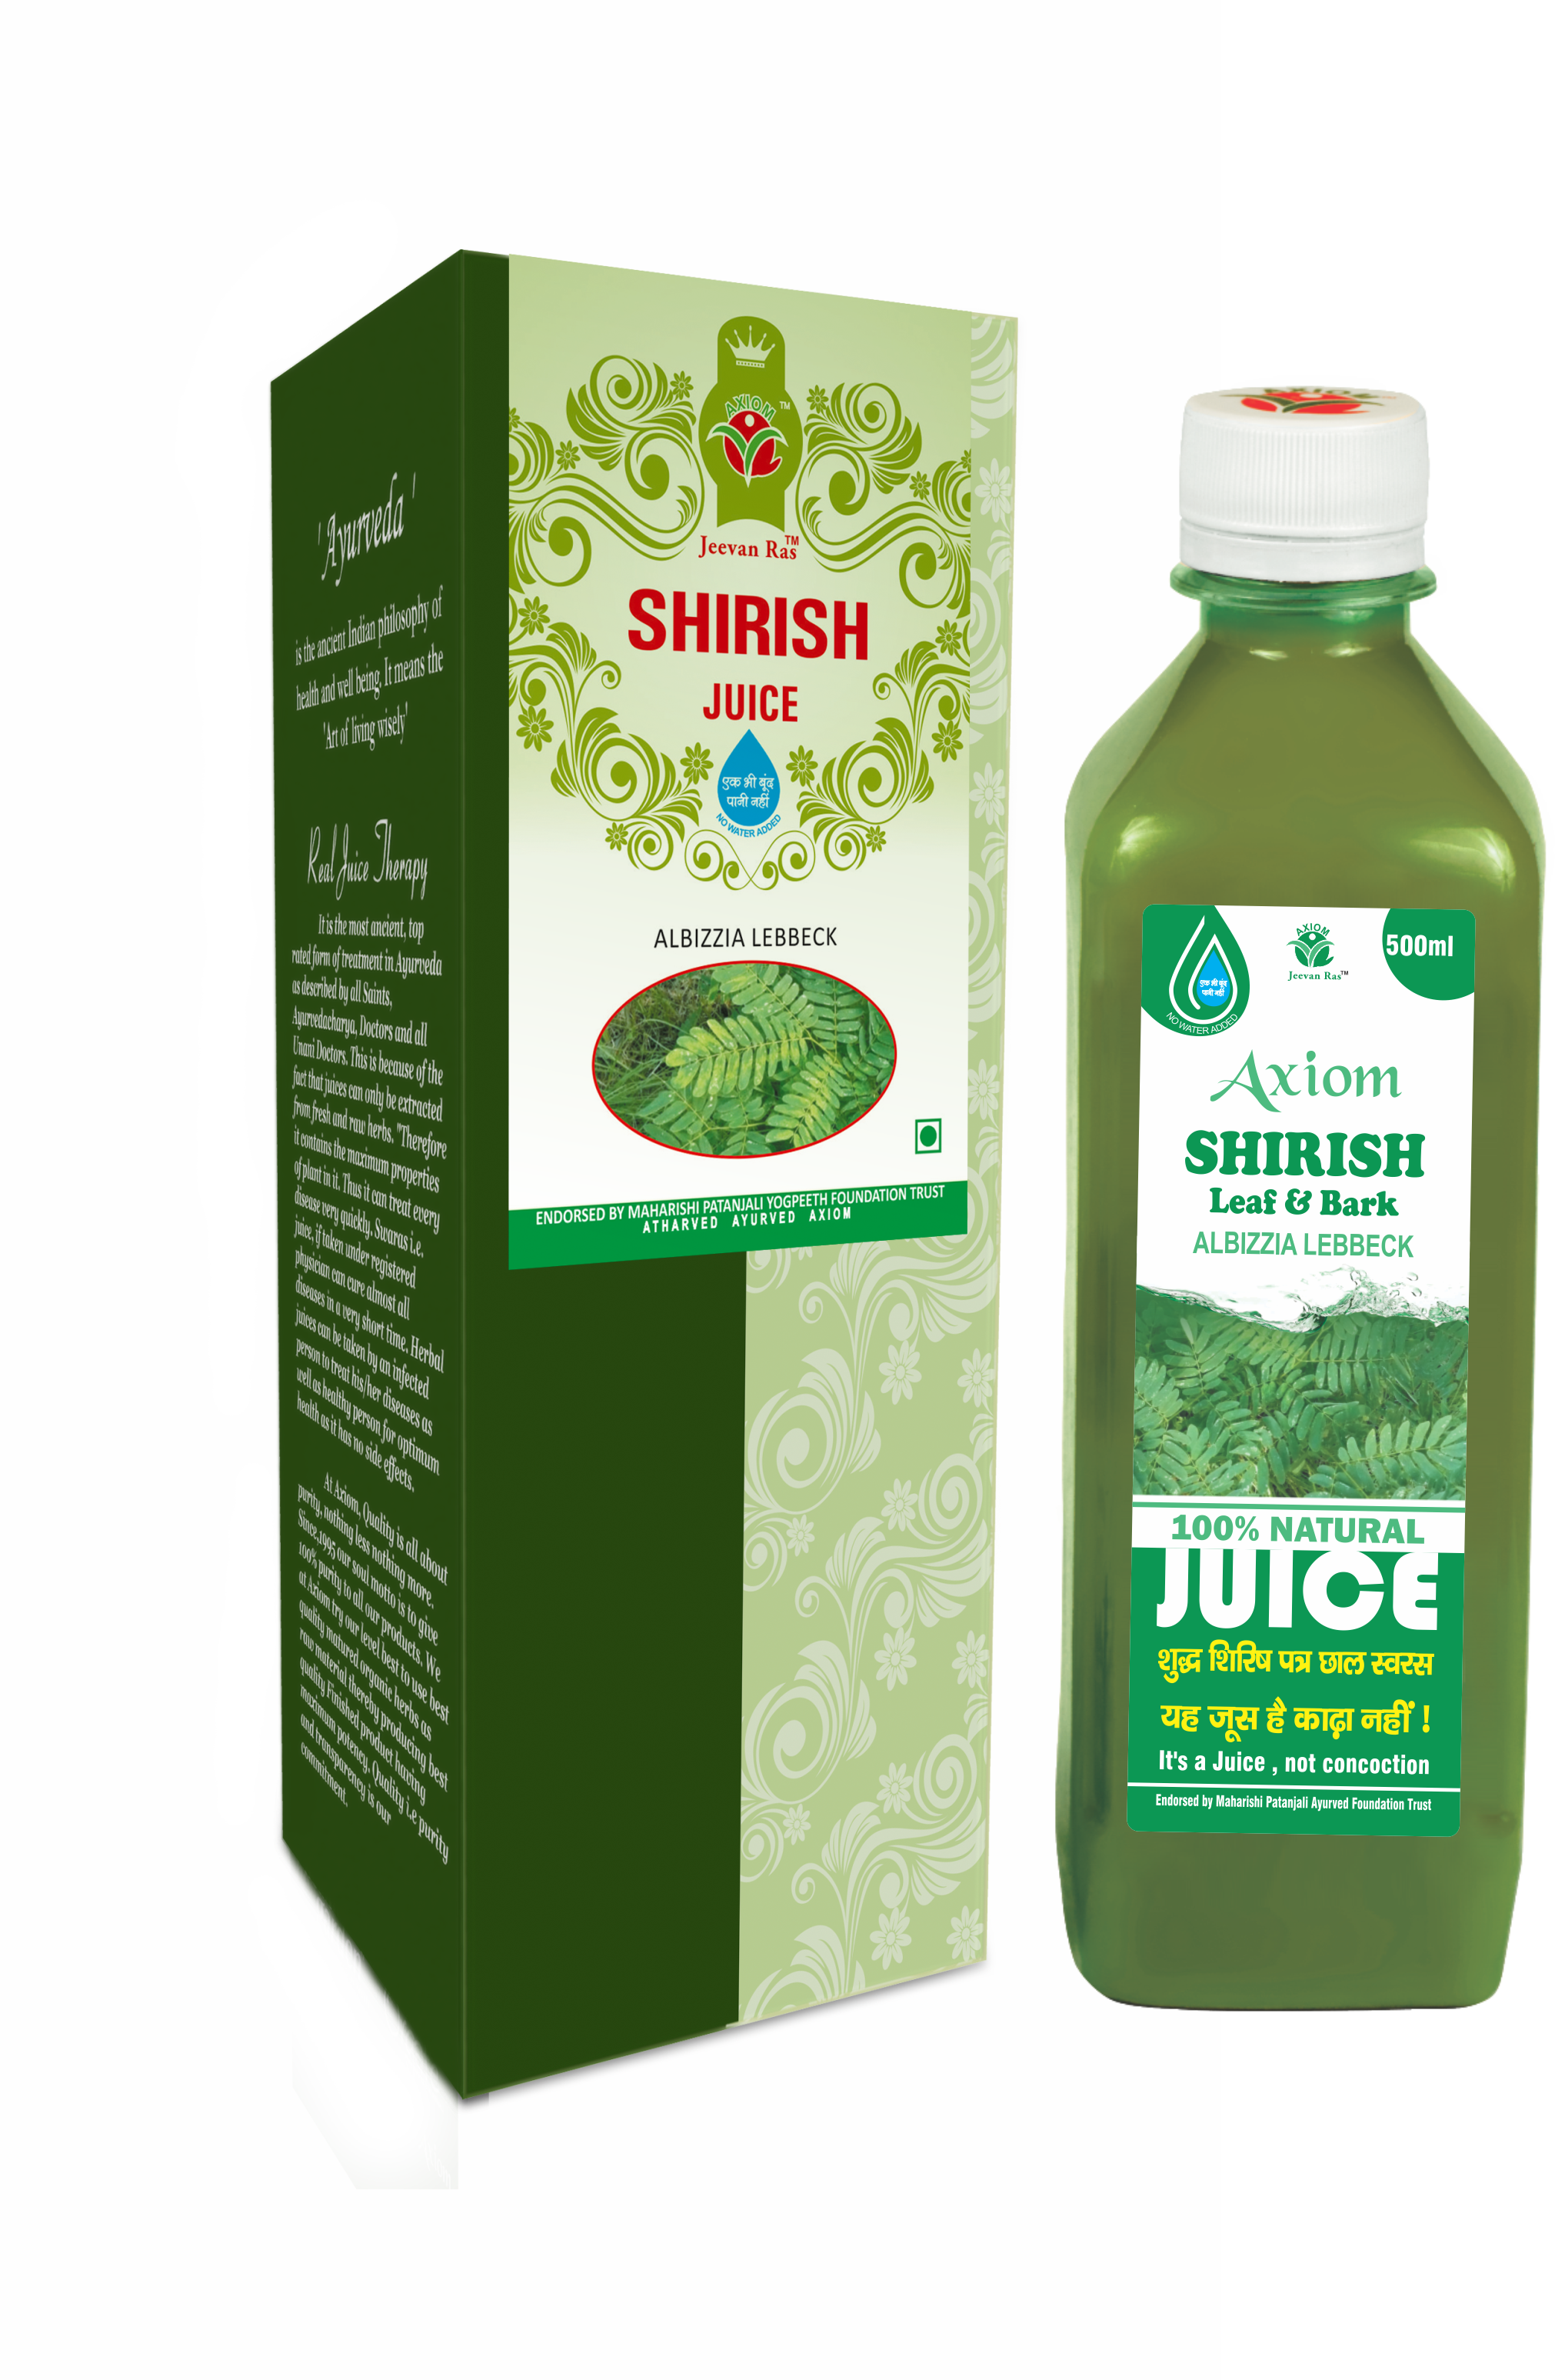 Buy Axiom Shirish Juice at Best Price Online